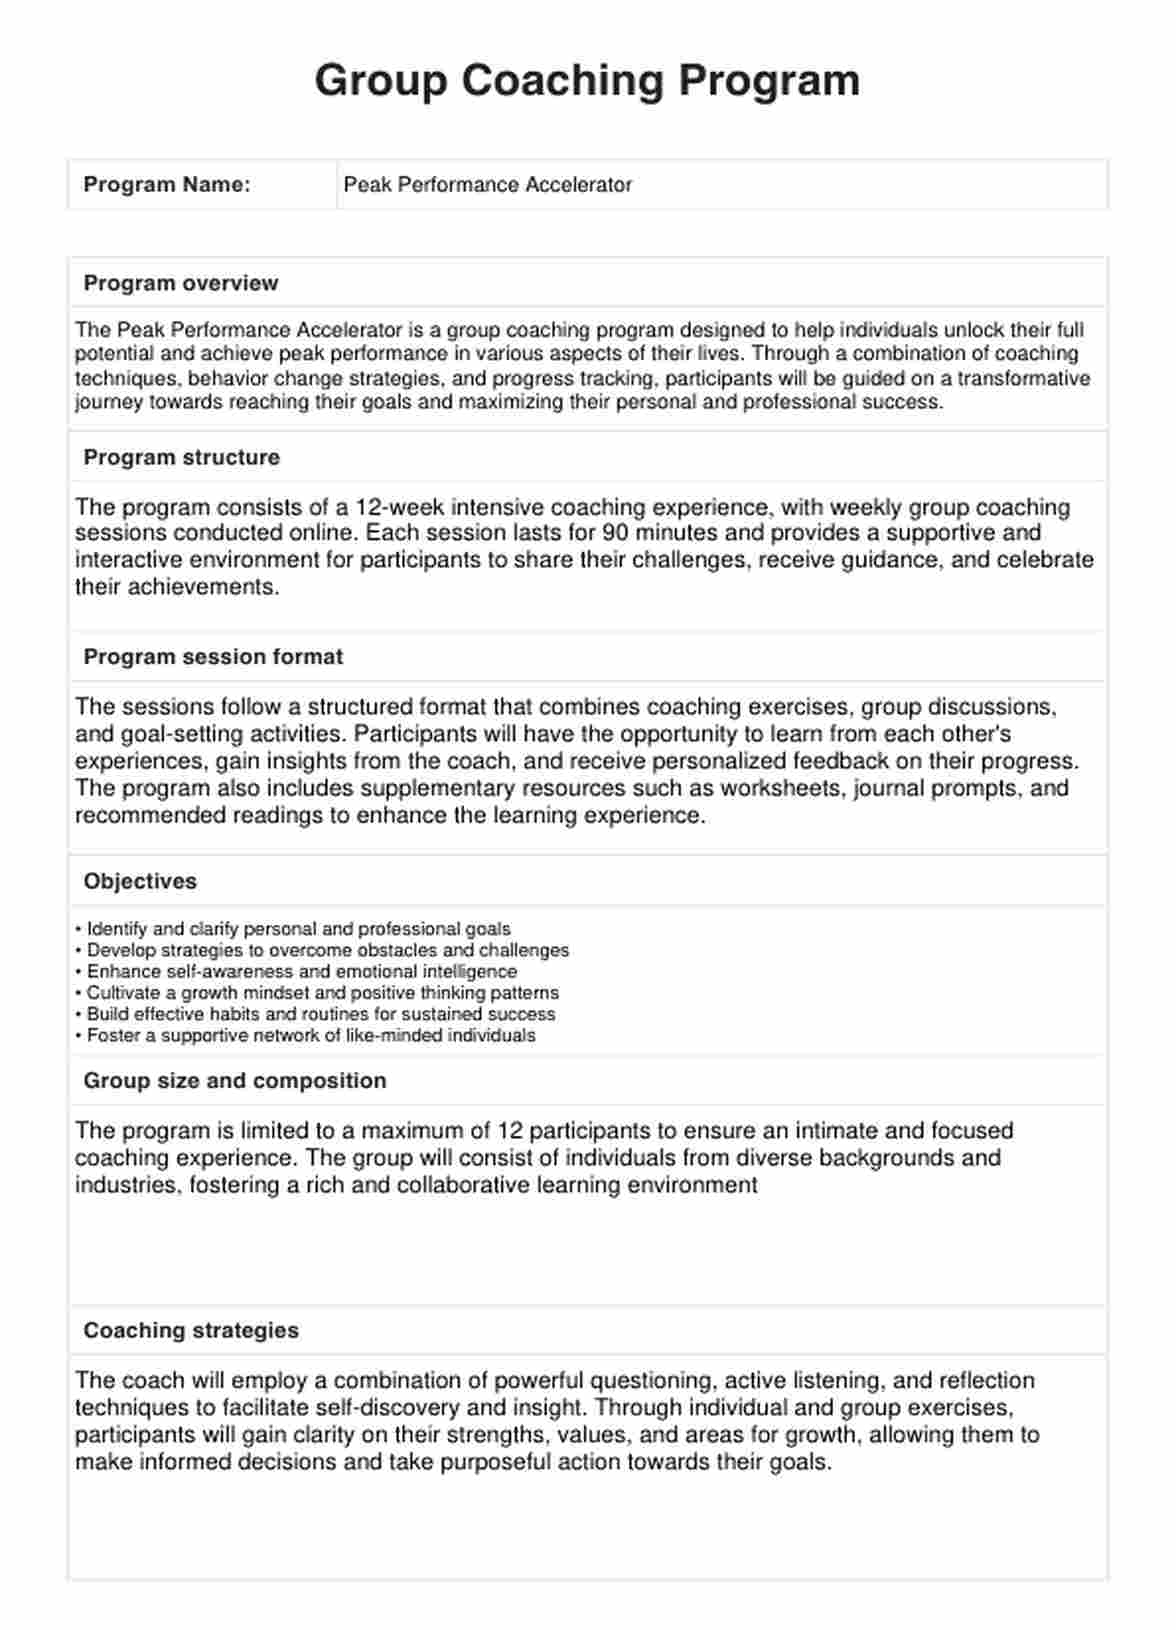 Group Coaching Program Template PDF Example